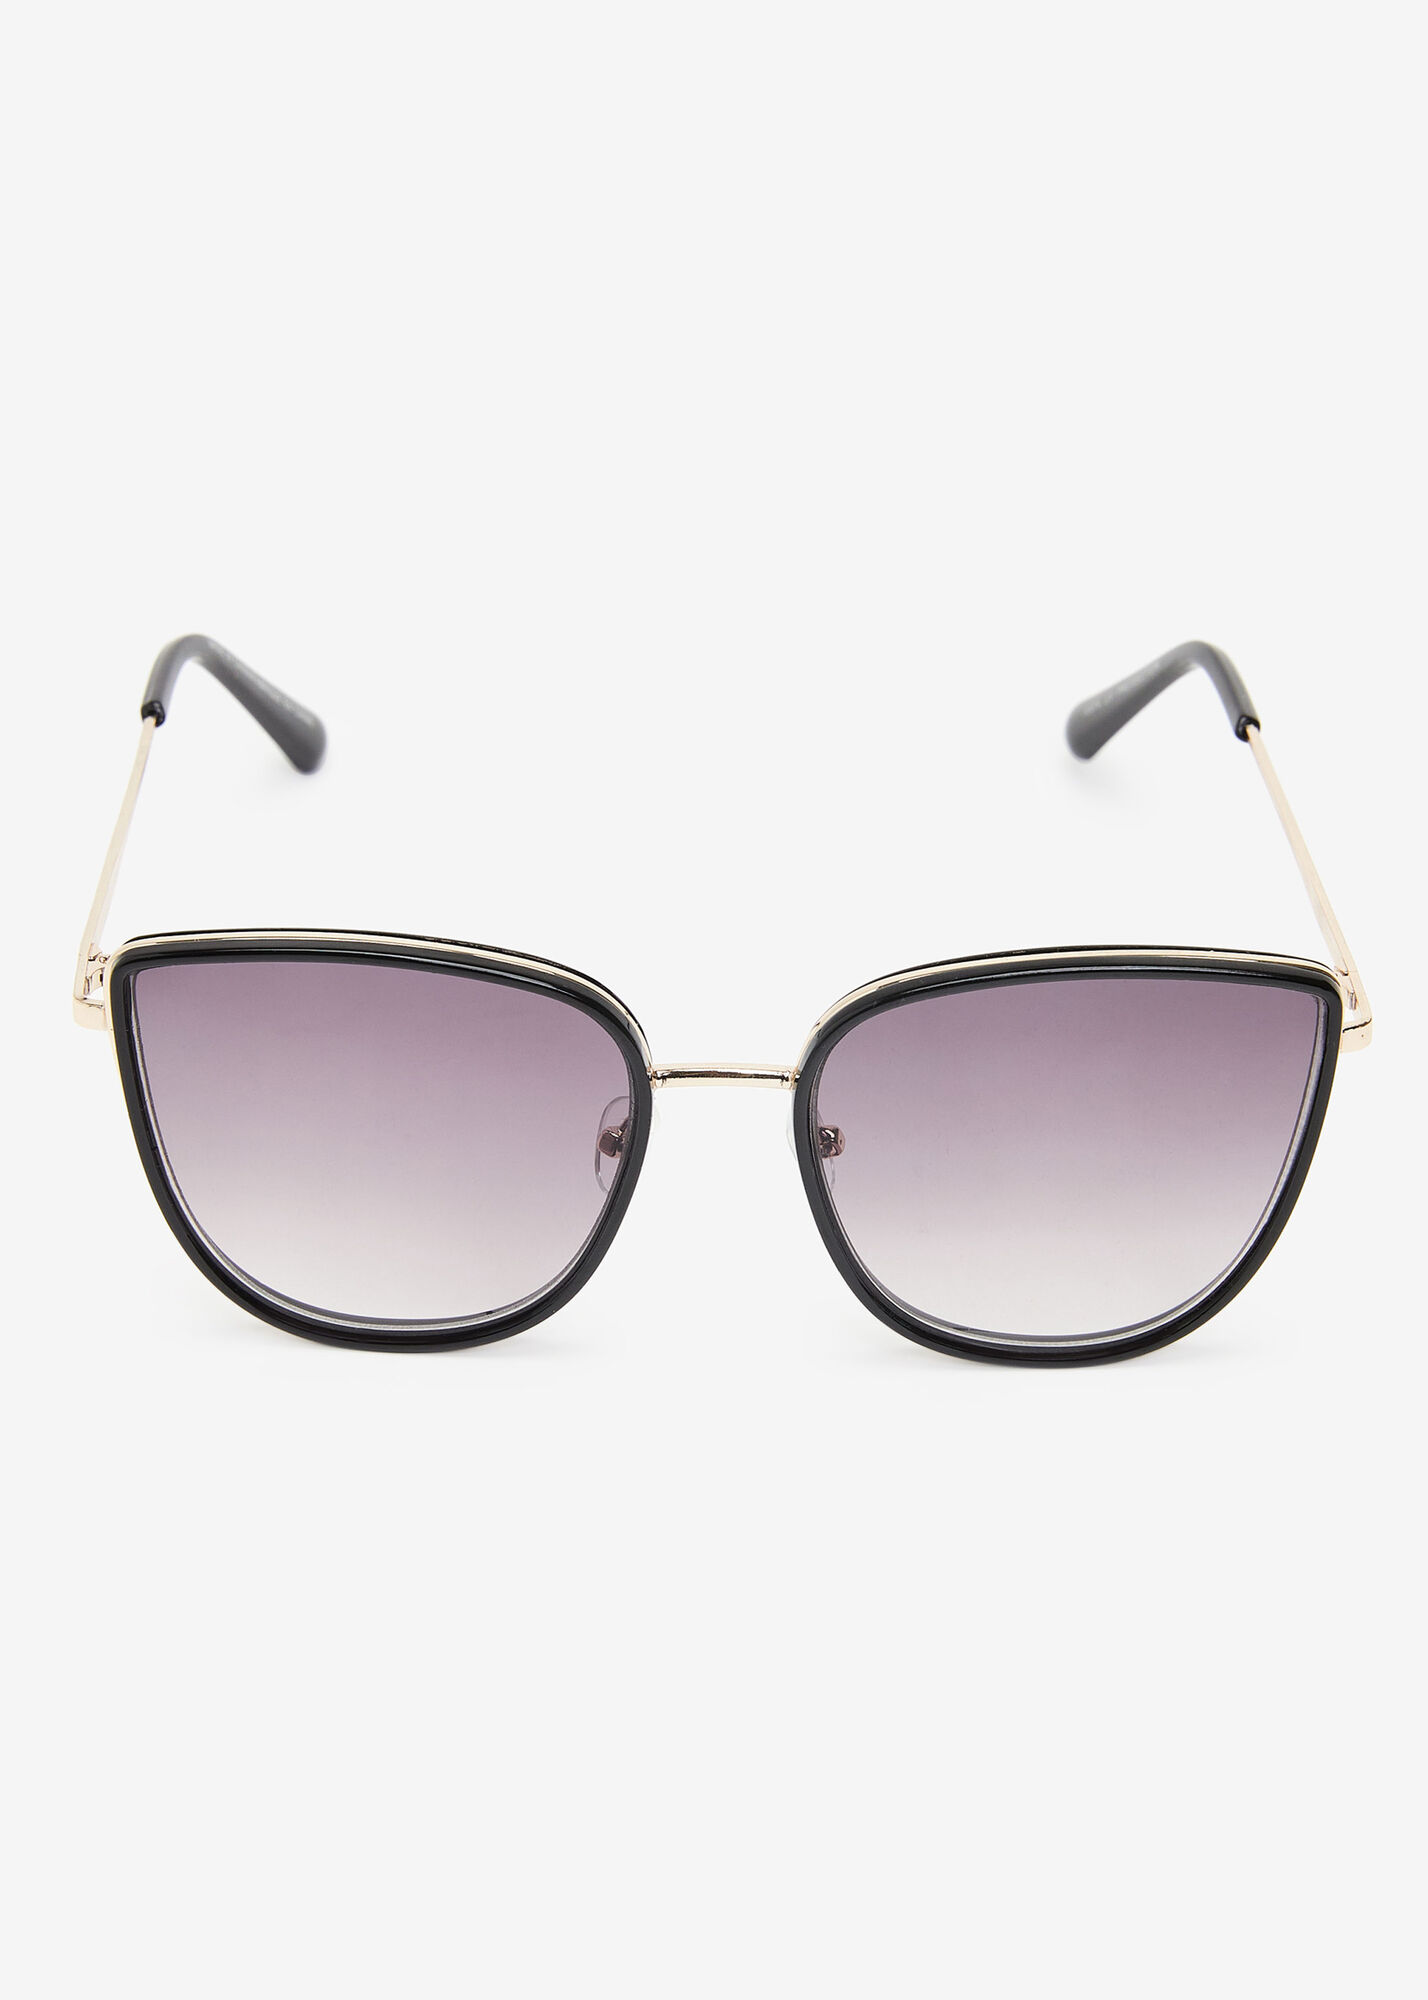 Retro Square Cat Eye Sunglasses